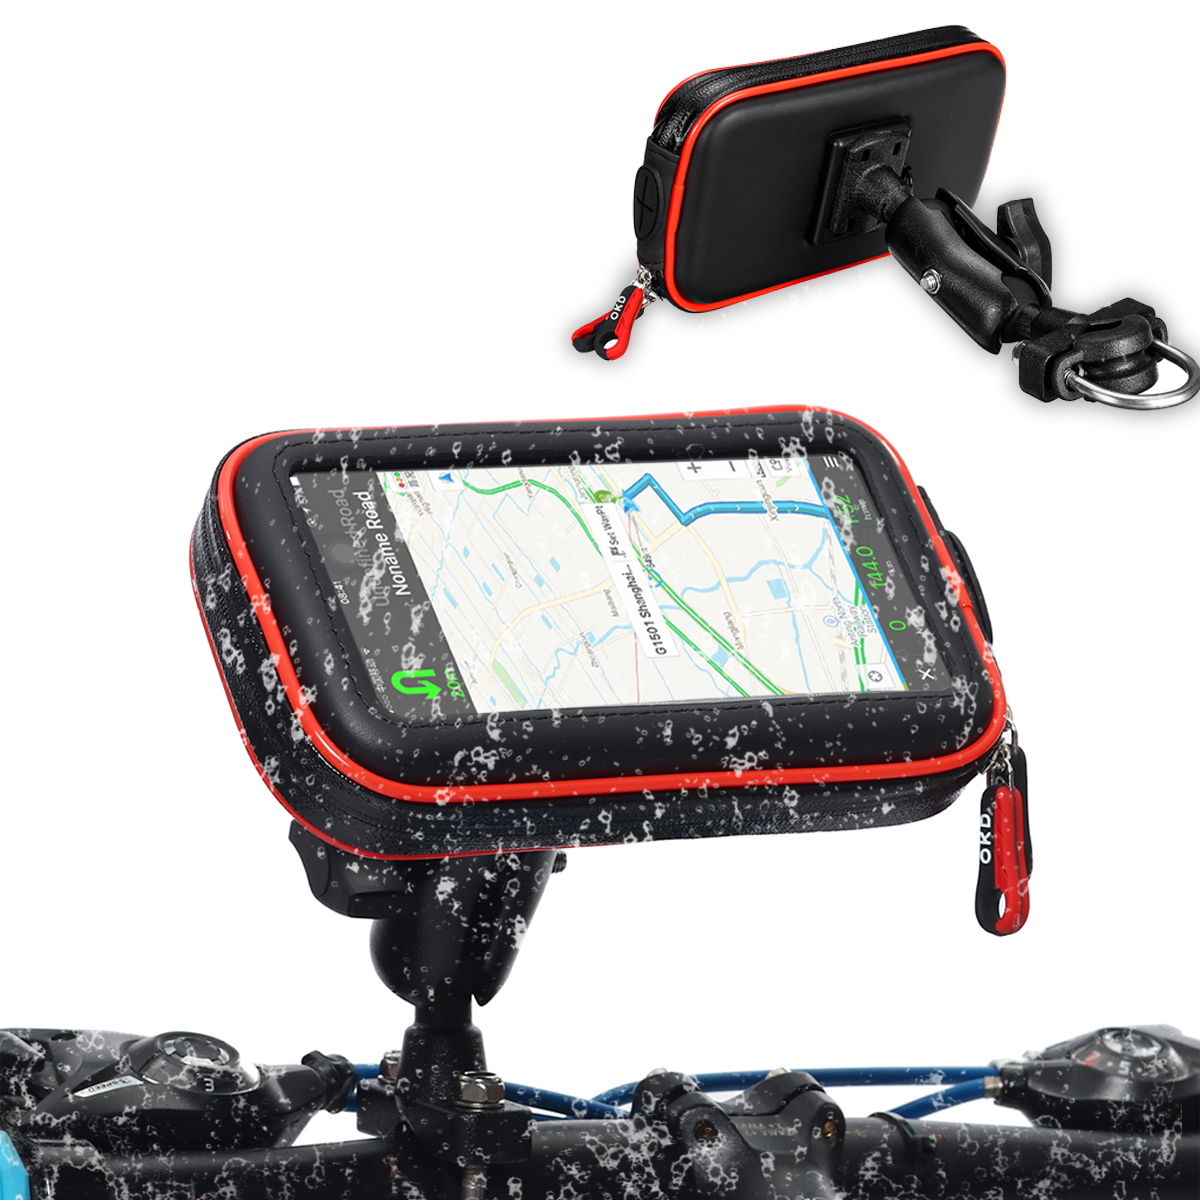 

Bike Bicycle Motorbike Handlebar Waterproof Phone Bag Phone Holder For Smart Phone iPhone XS Max Samsung Galaxy S10+